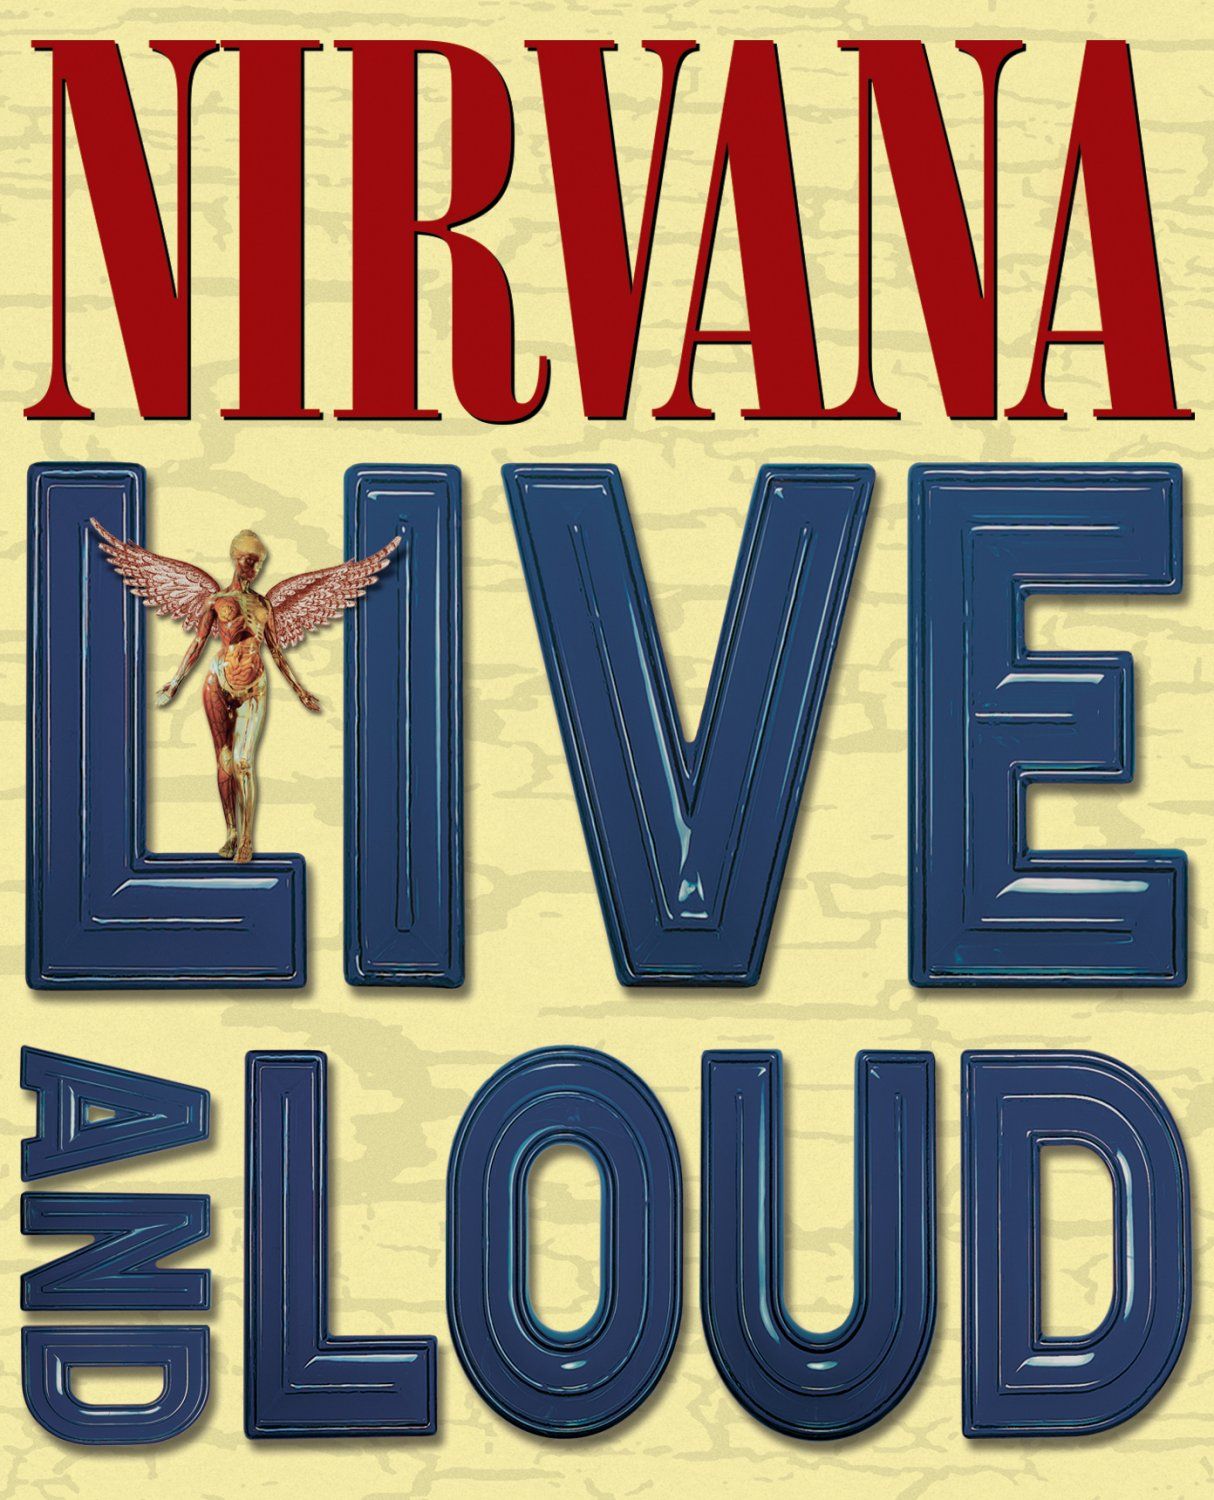 Live & Loud cover art